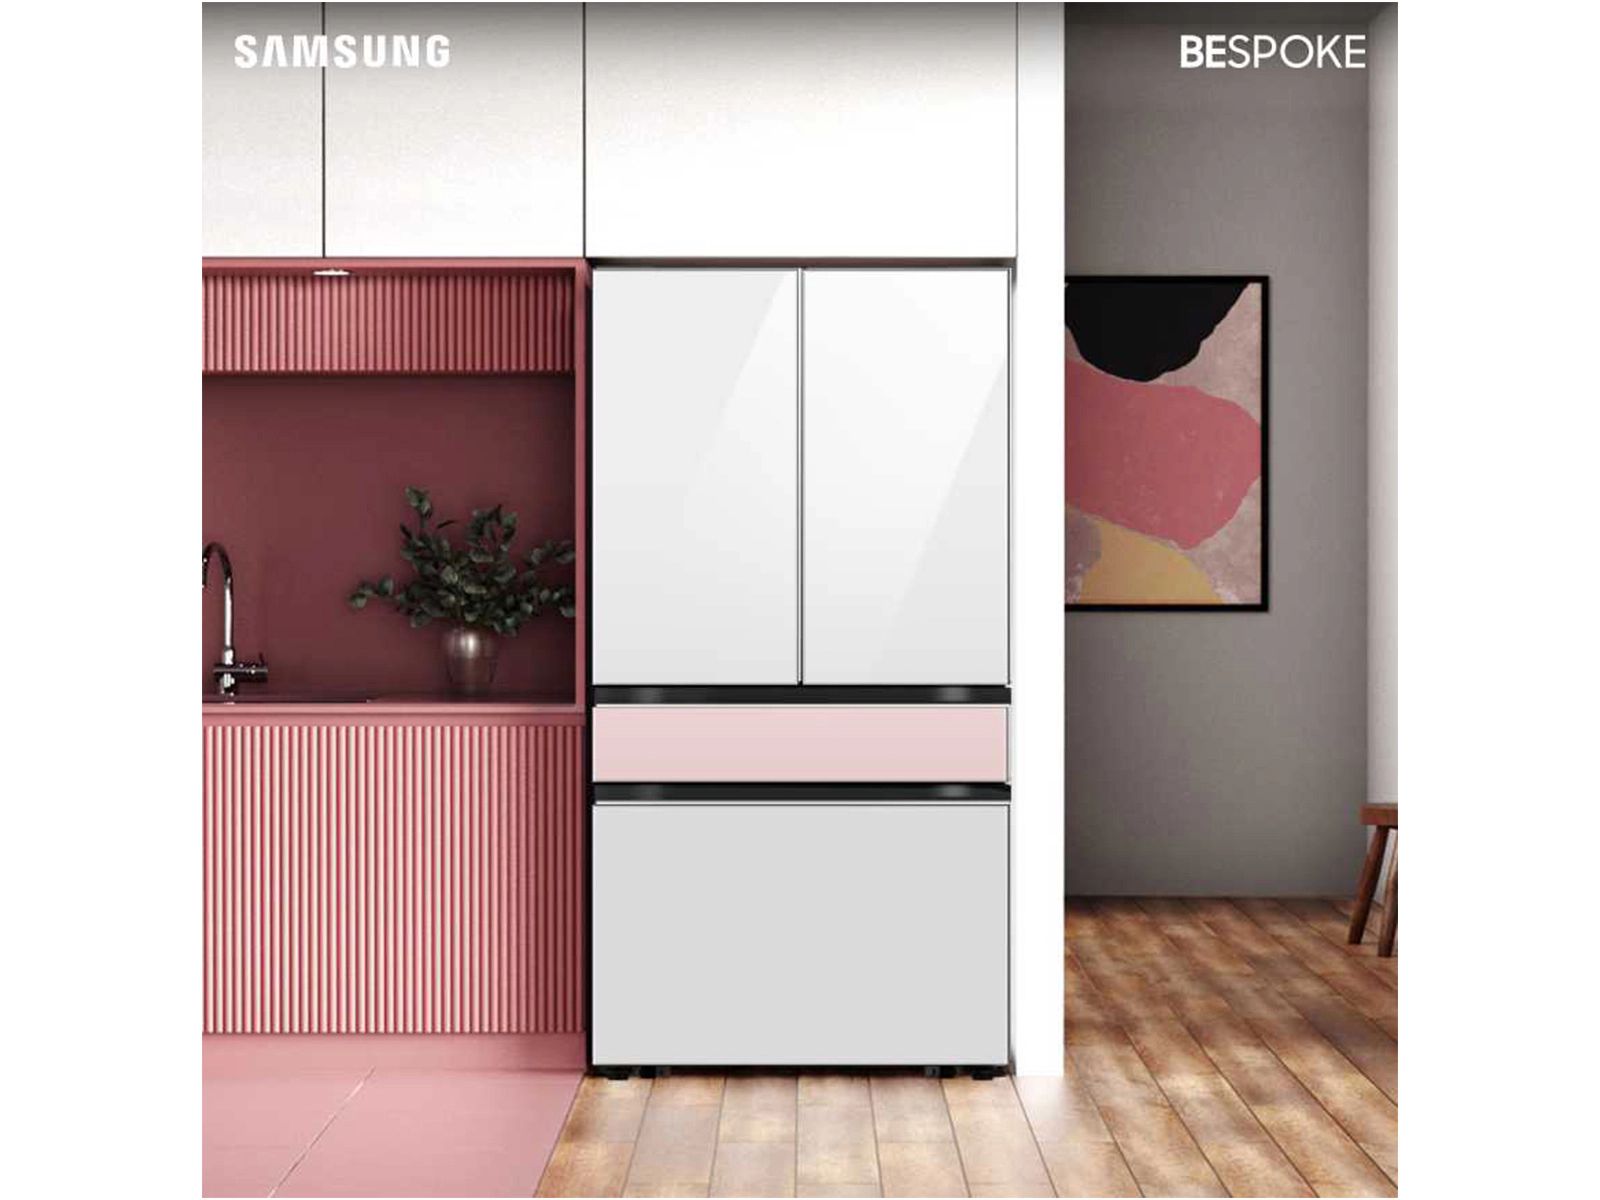 Bespoke 4-Door French Door Refrigerator (29 cu. ft.) with Beverage Center&trade; in White Glass w... | Samsung